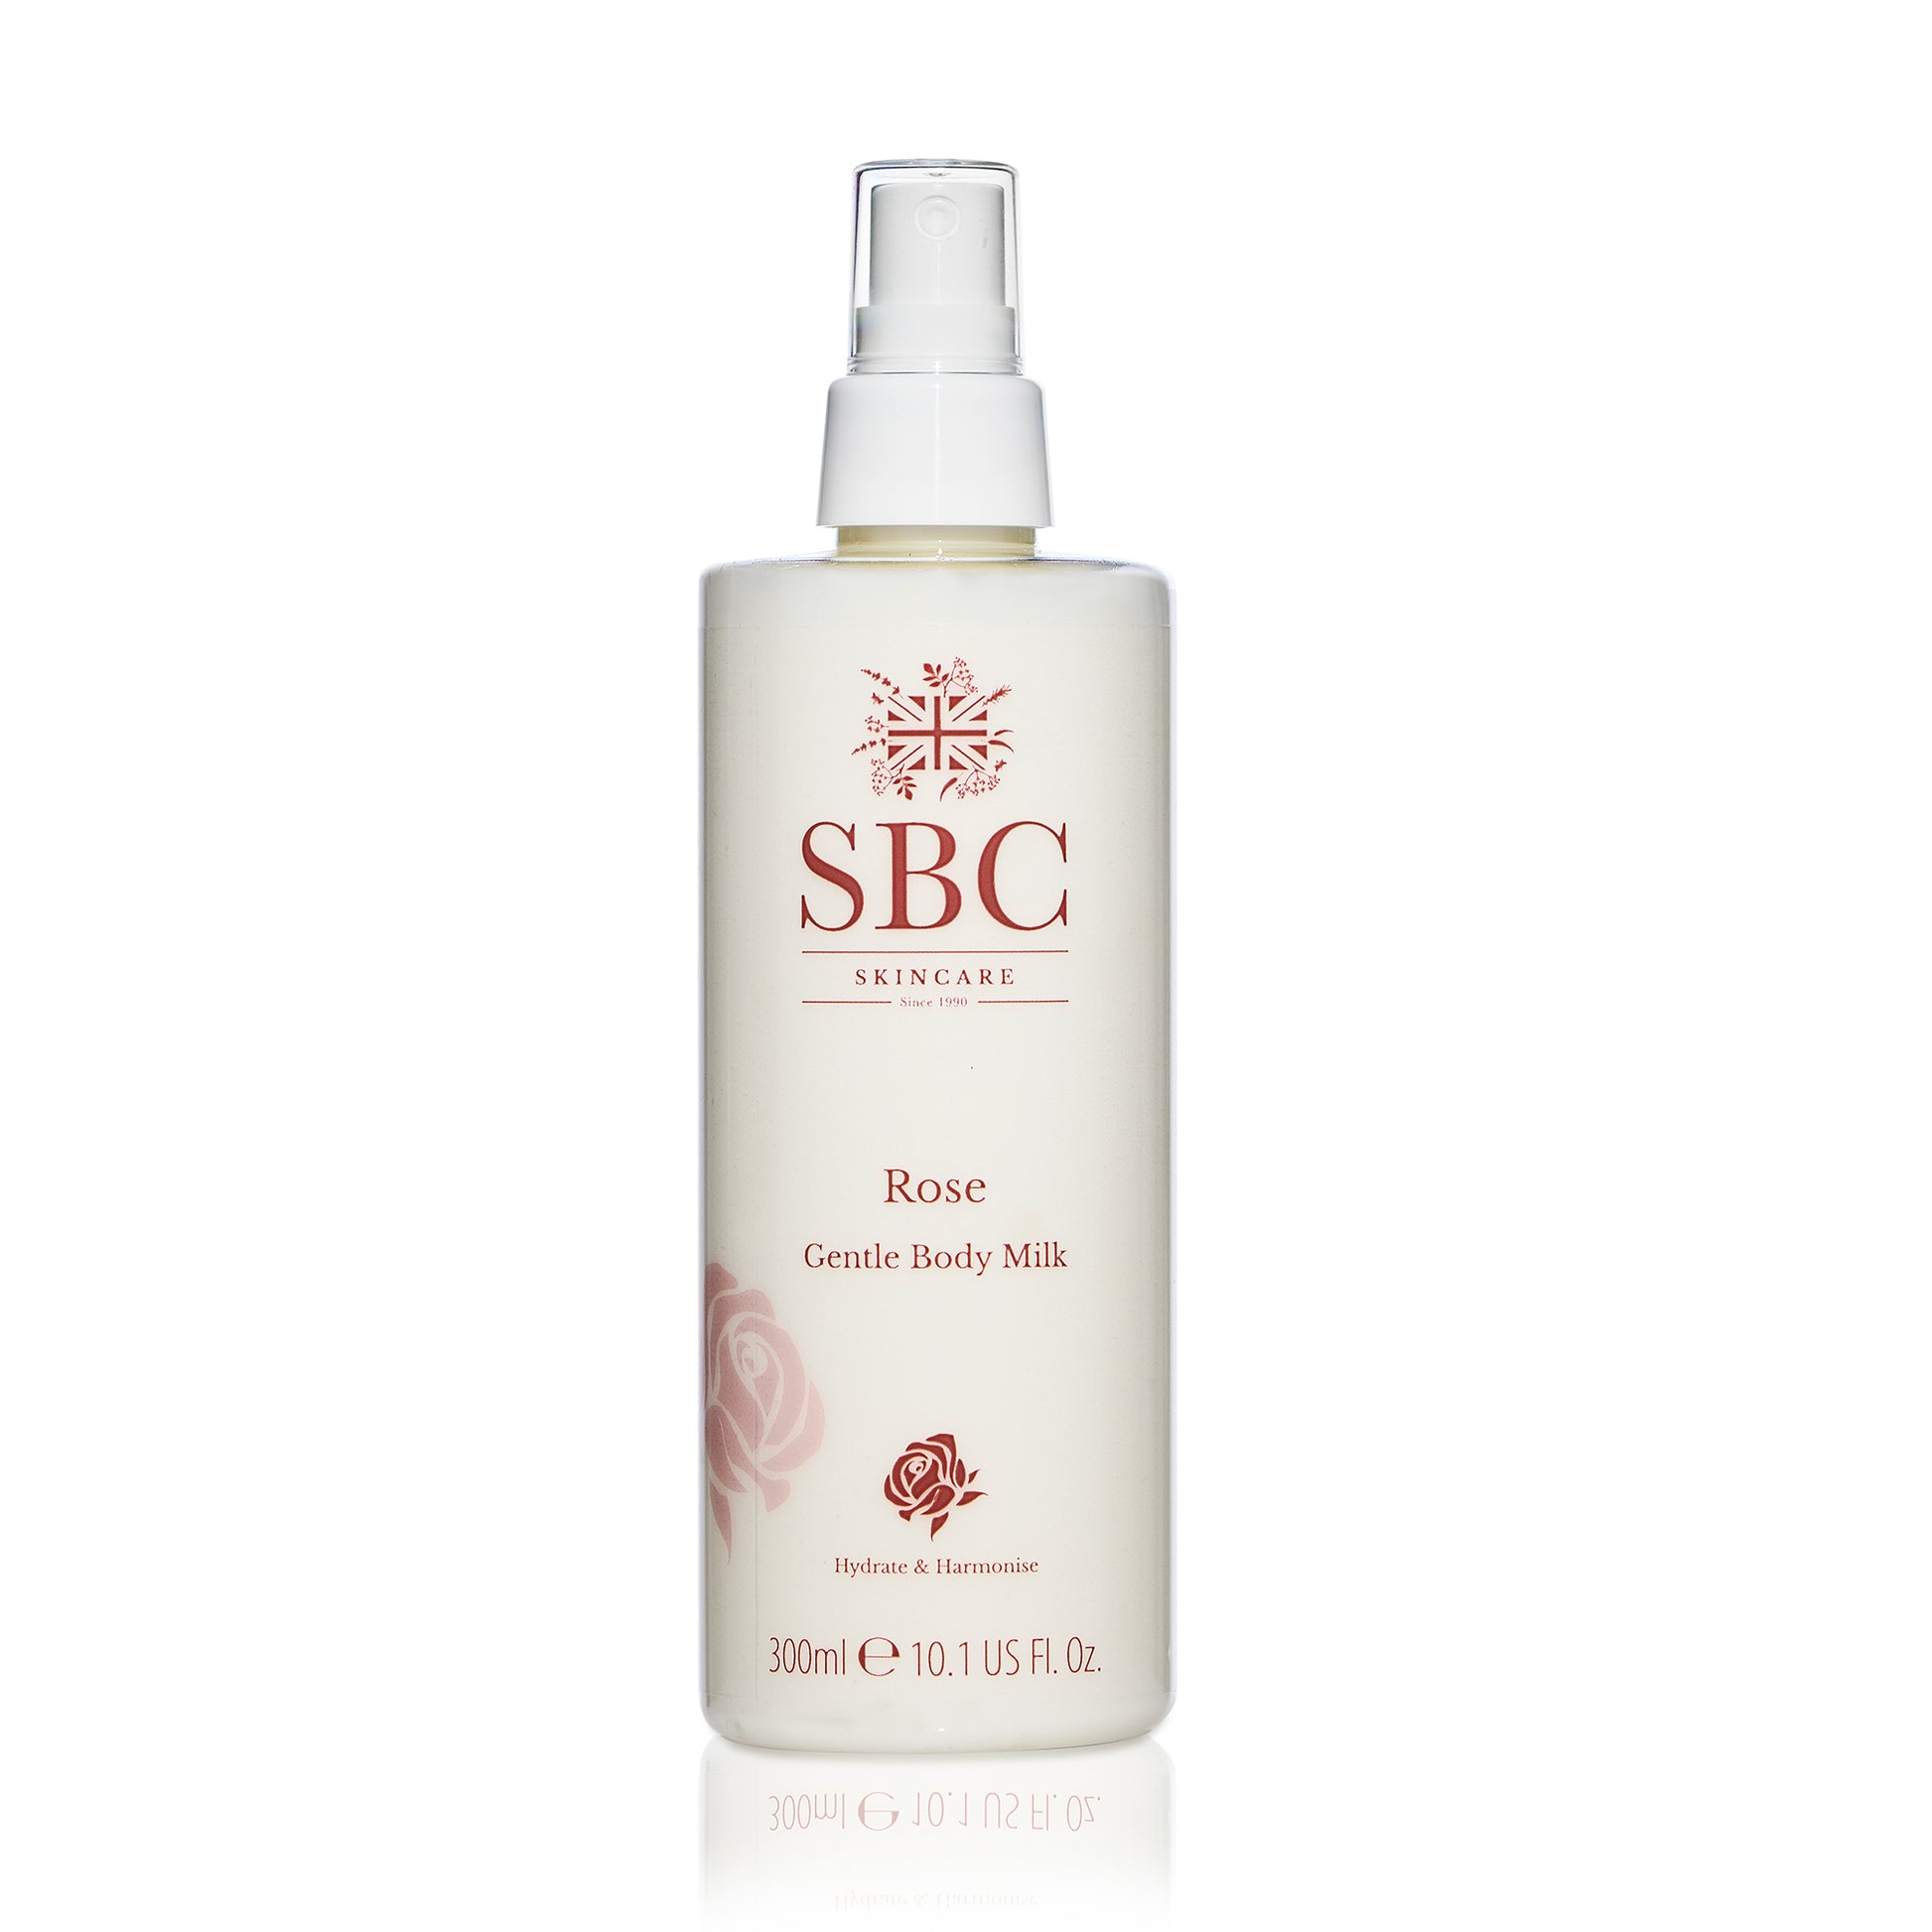 SBC Skincare's Rose Gentle Body Milk 300ml